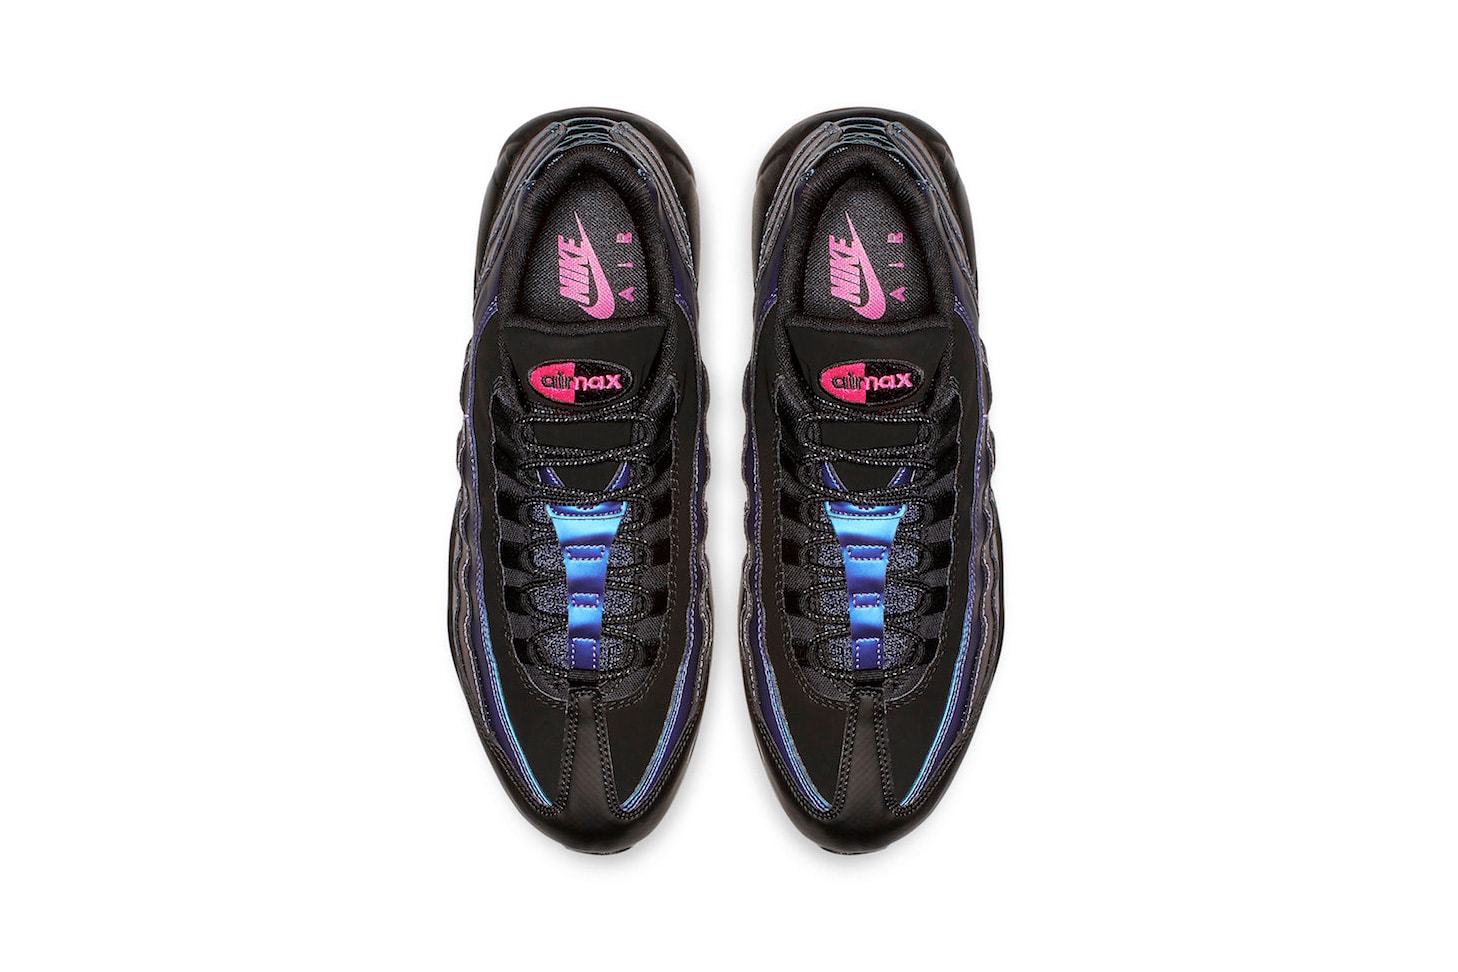 nike air max 95 black laser fuchsia 2018 footwear nike sportswear footwear